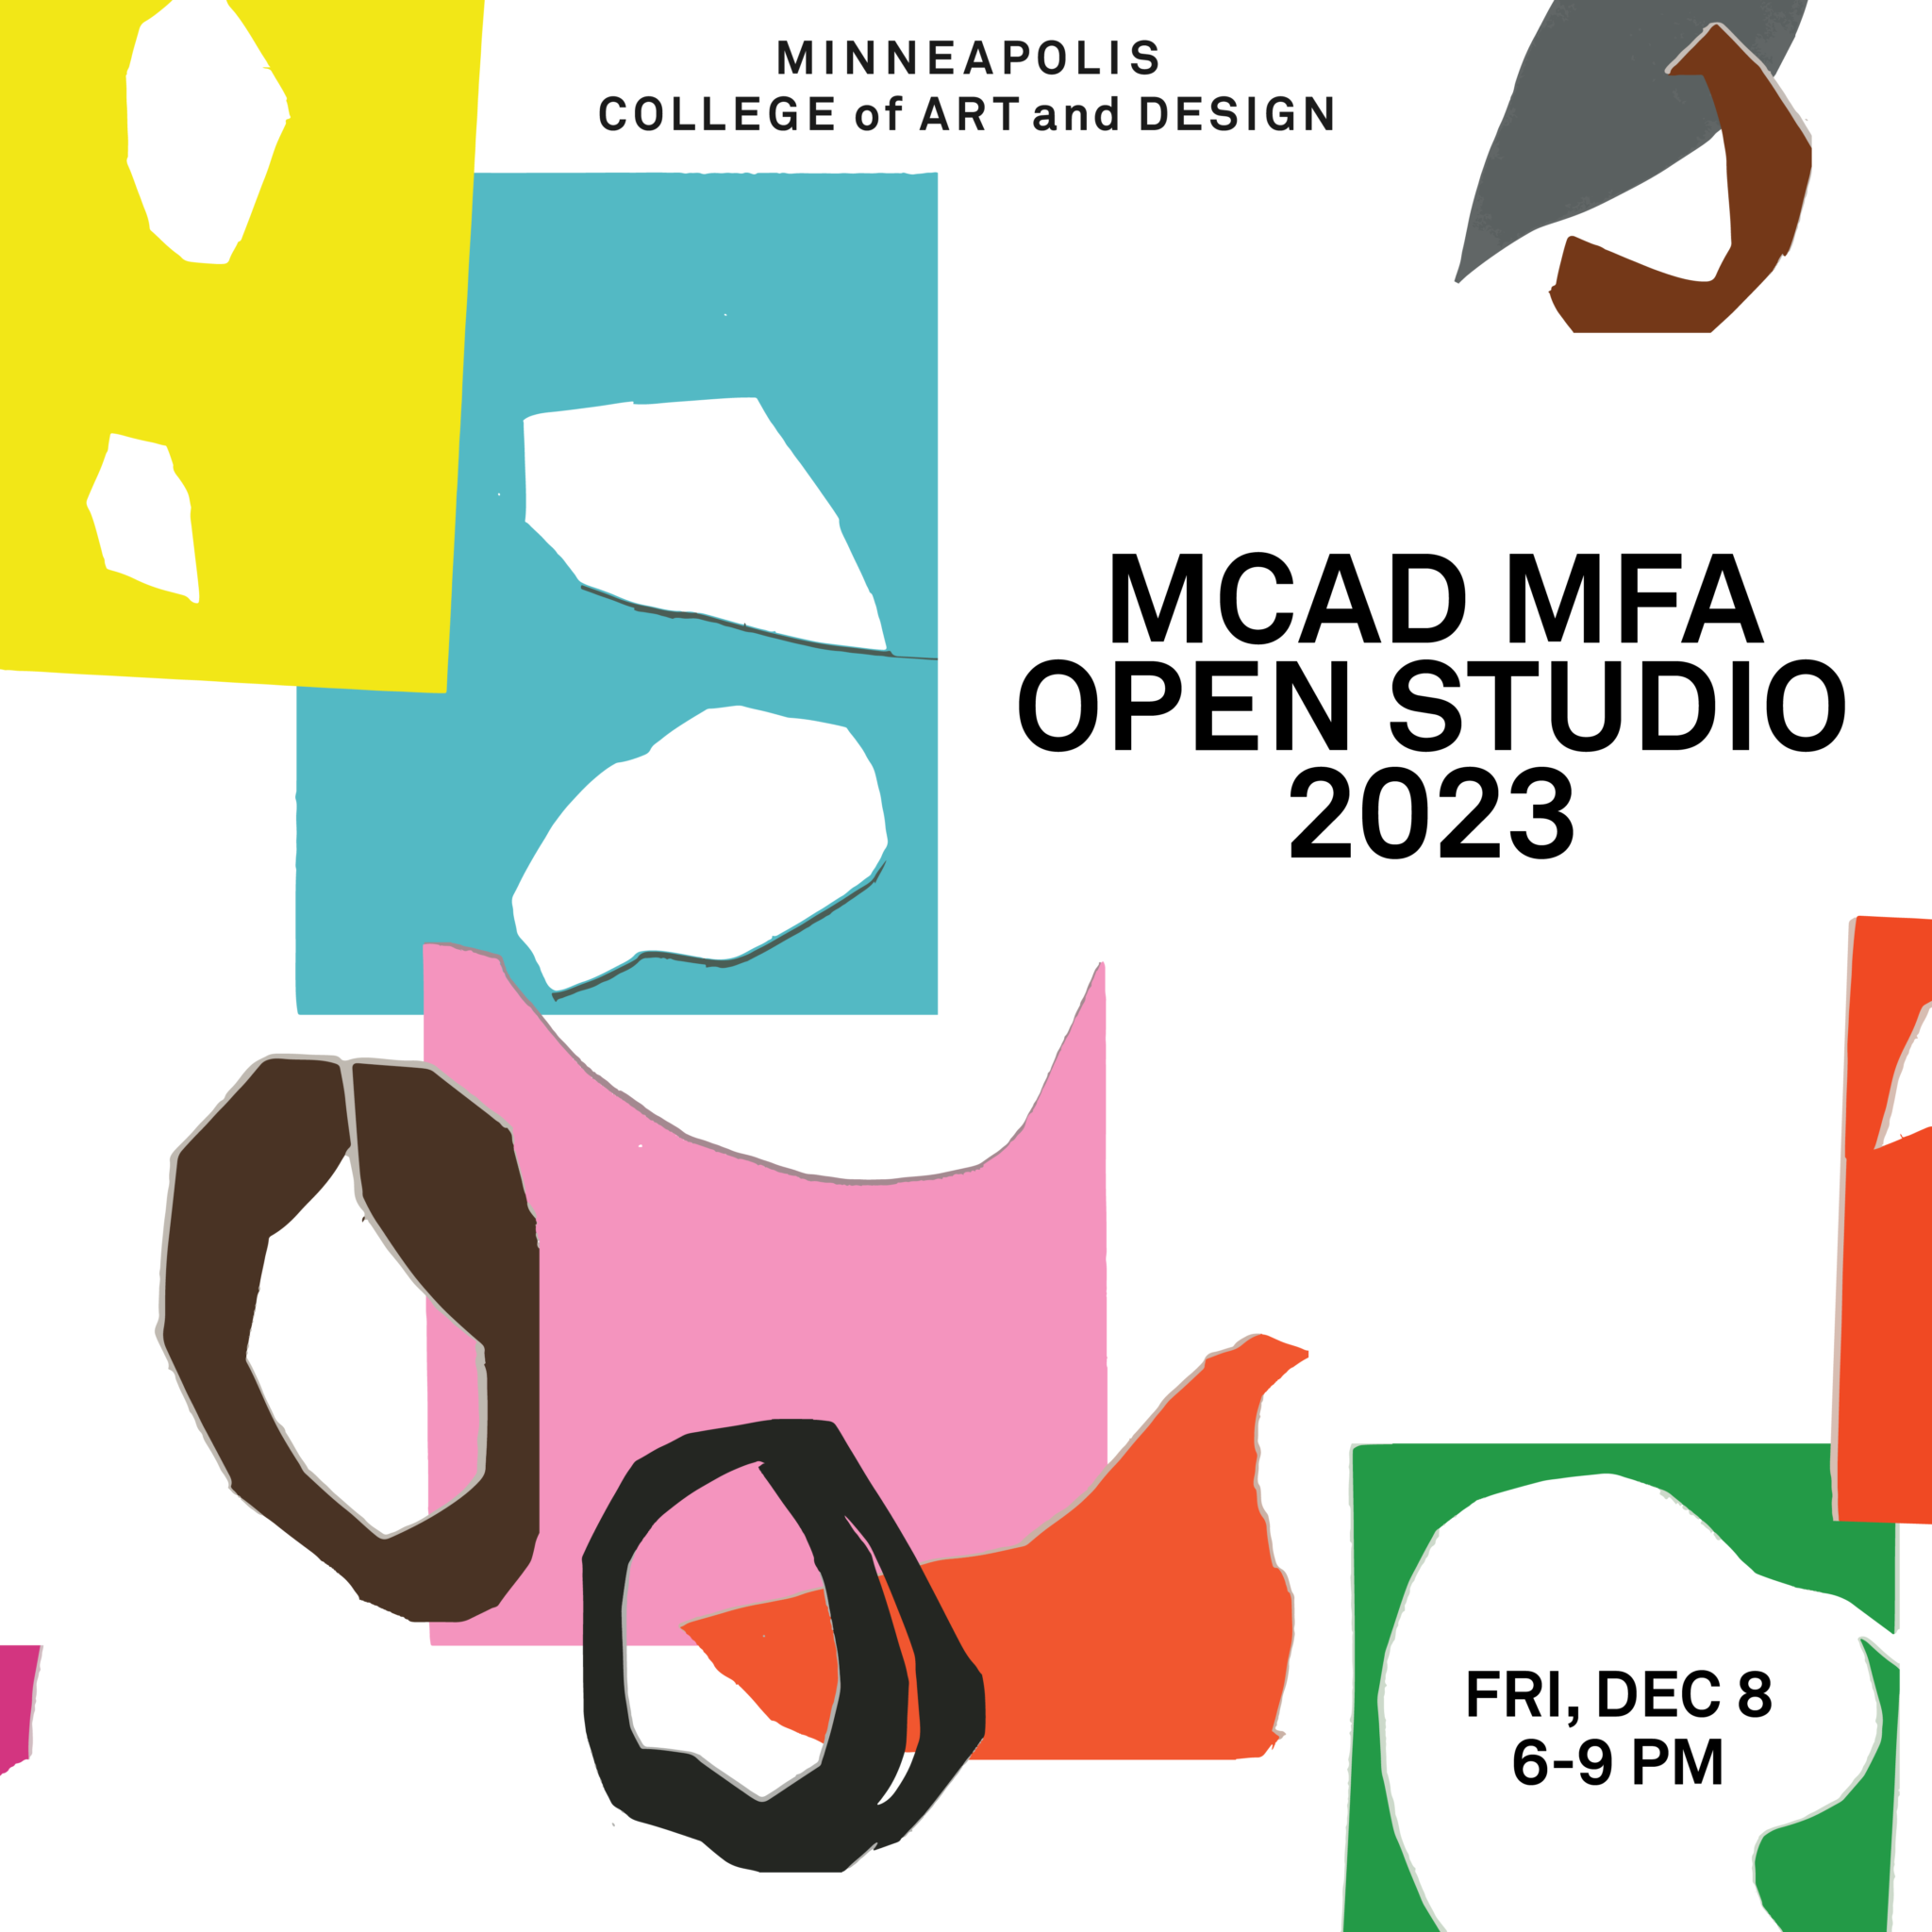 MCAD MFA Open Studio 2023